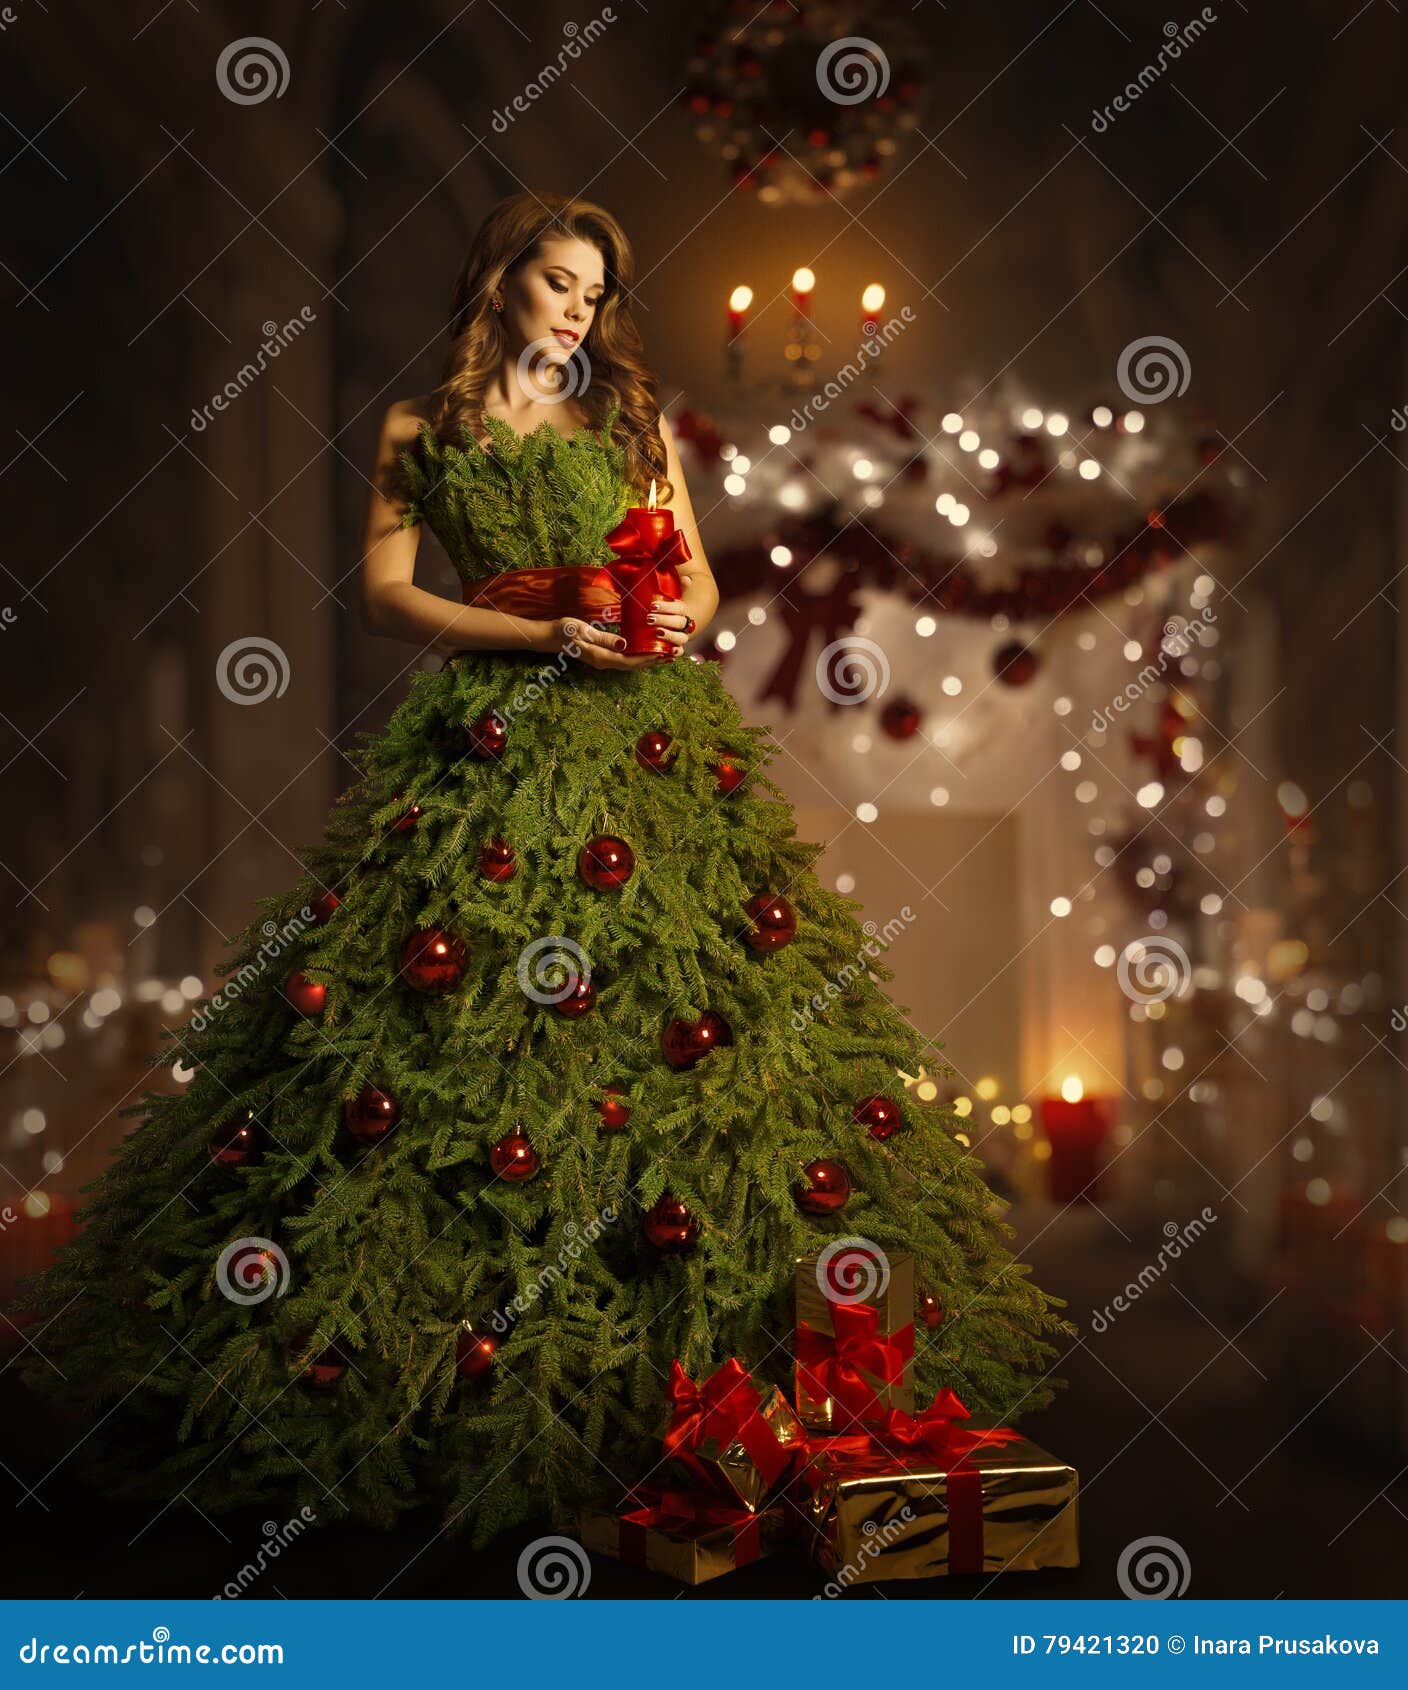 https://thumbs.dreamstime.com/z/woman-christmas-tree-dress-fashion-model-xmas-gown-costume-fairy-magic-night-79421320.jpg